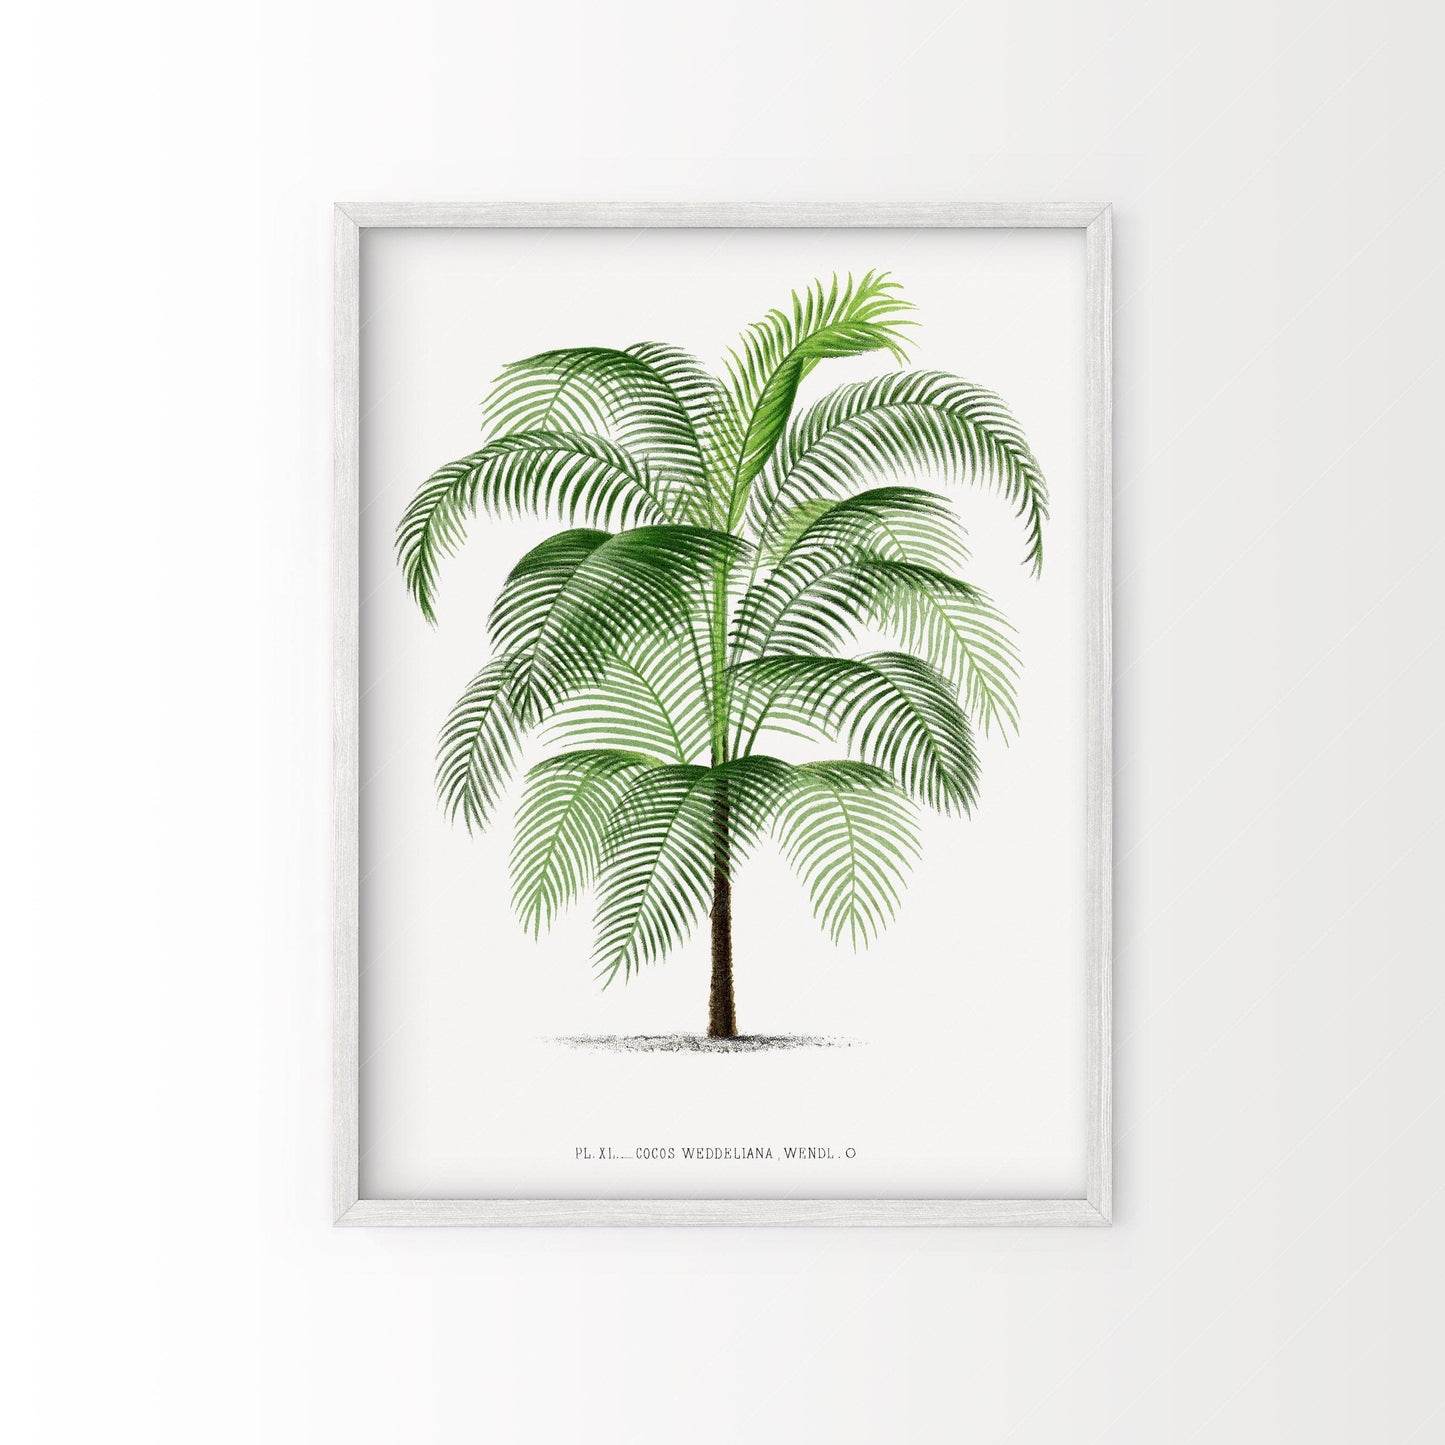 Home Poster Decor Single Palm Leaves, Beach House Decor, Palm Tree Vintage, Antique Coastal, Farmhouse Decor, Summer Tropical Boho, Botanical Wall Art, Exotic Nature